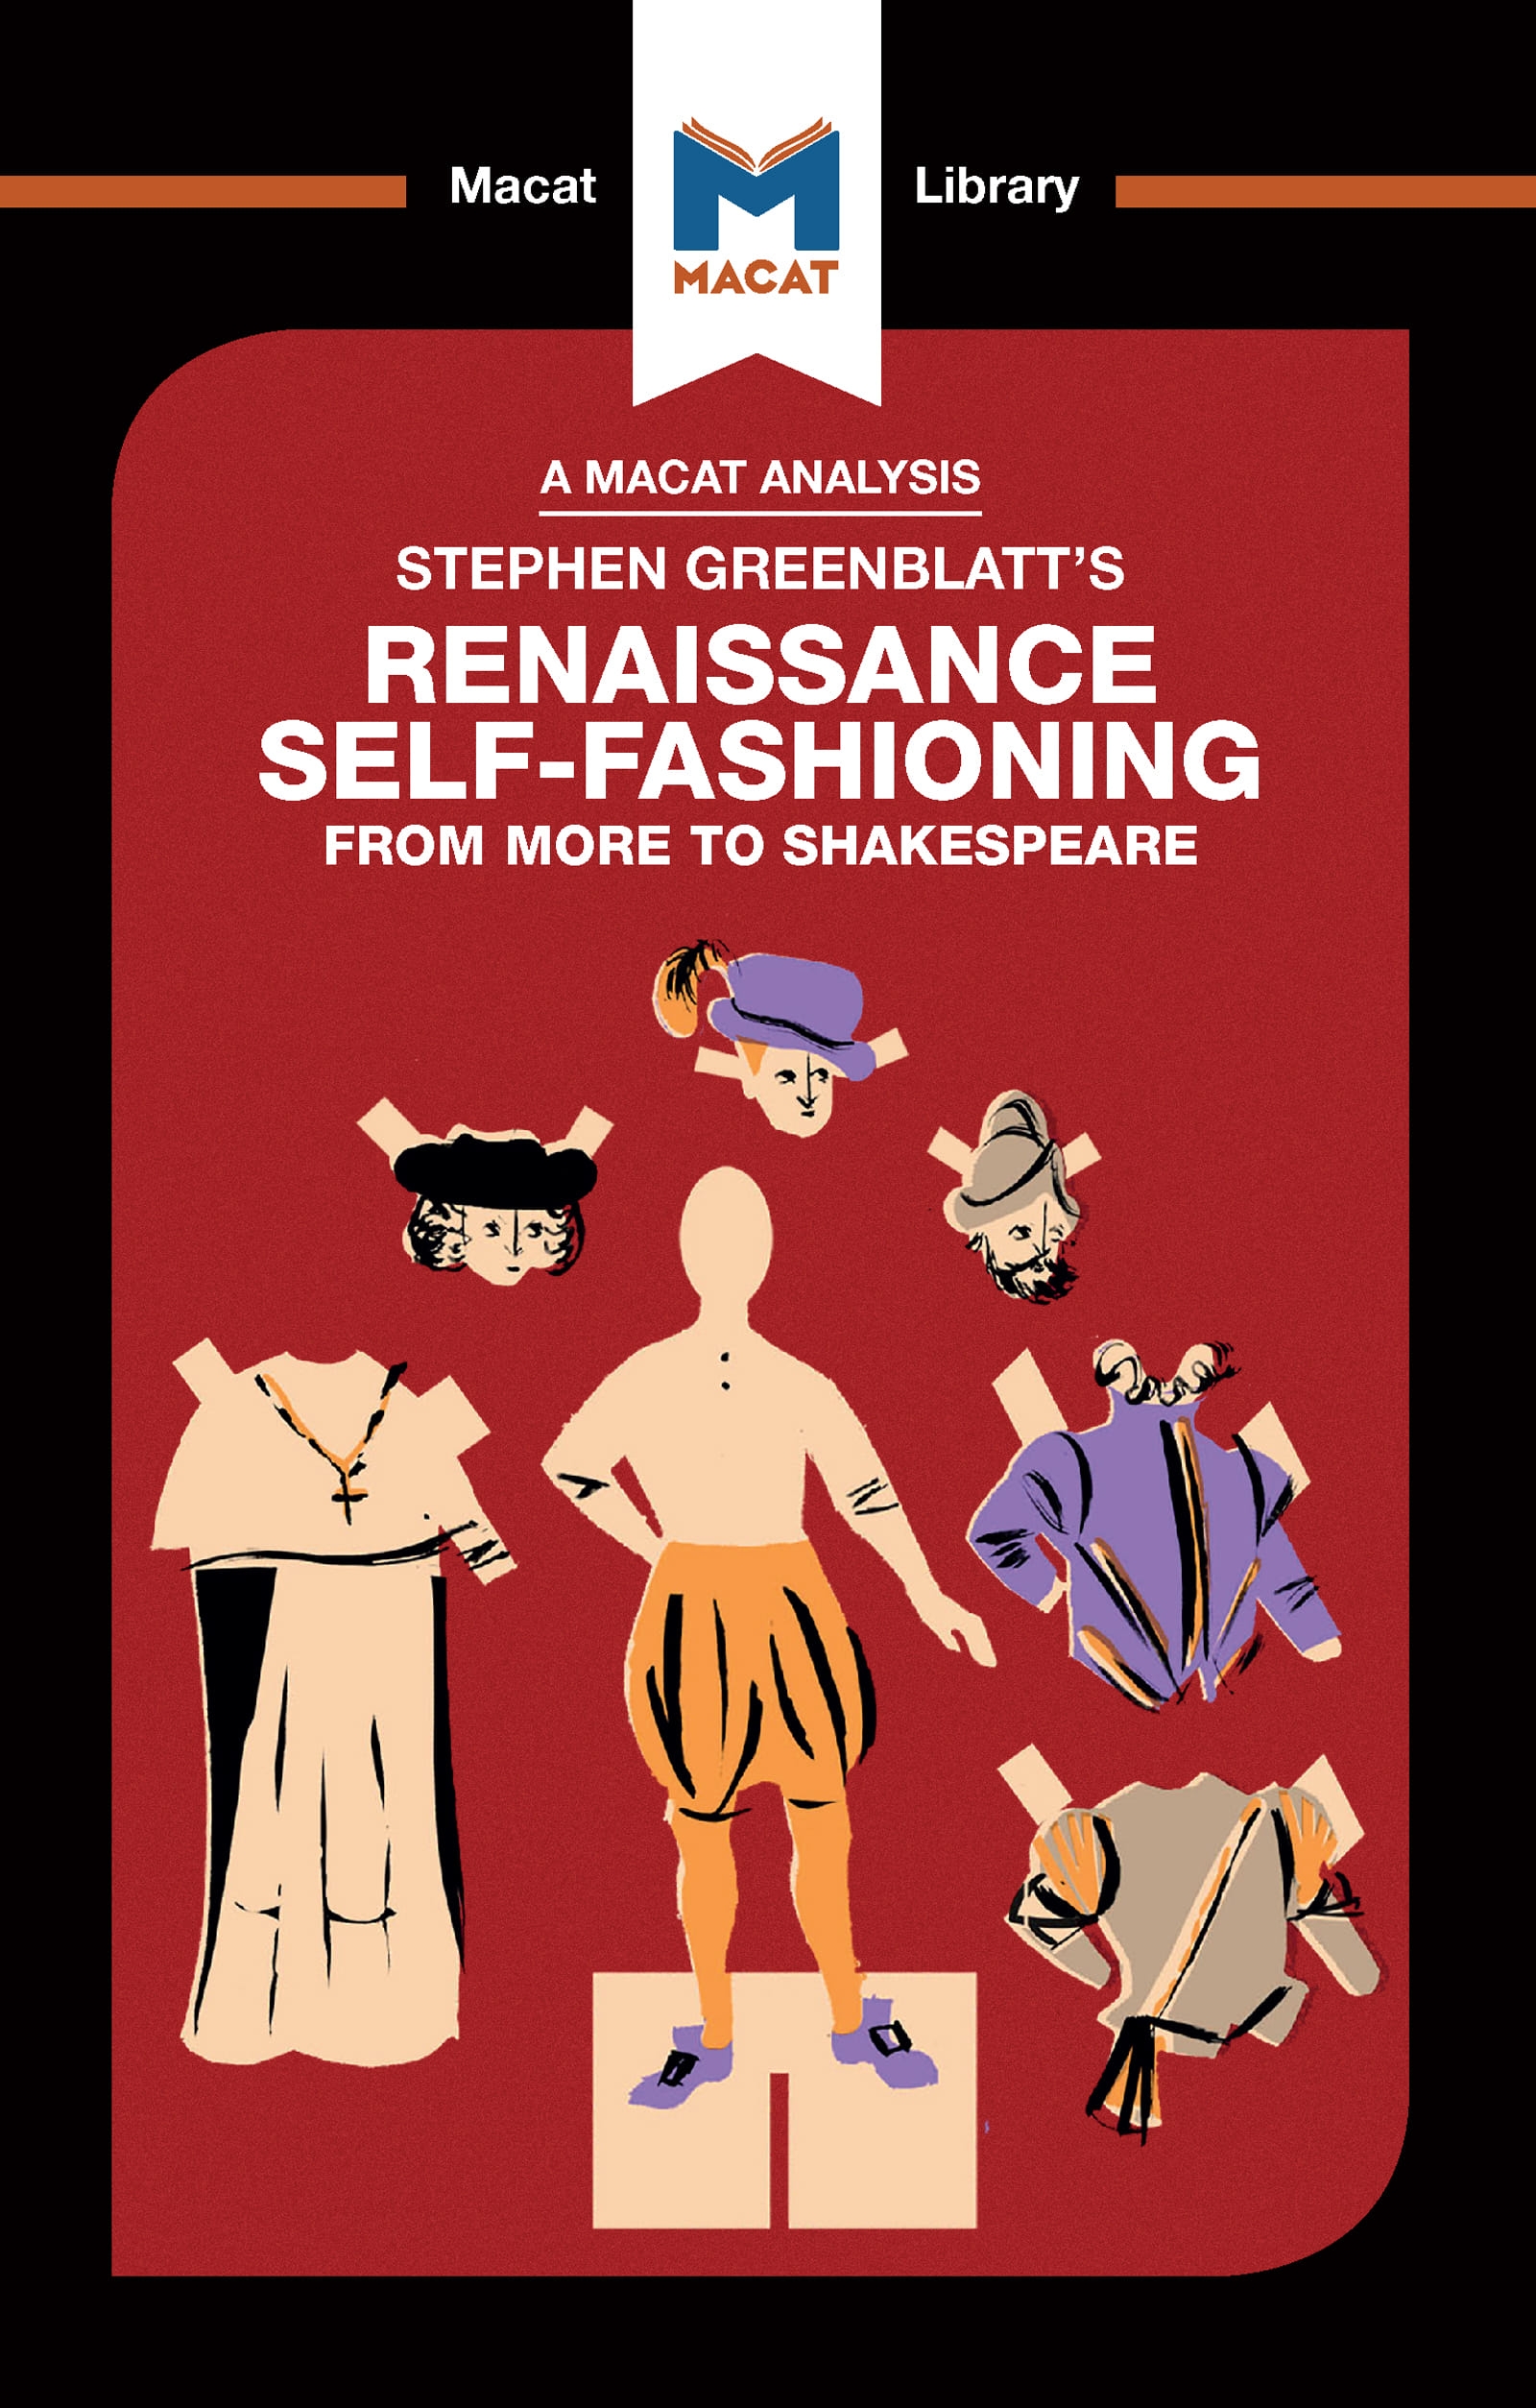 Stephen Greenblatt’s Renaissance Self-Fashioning: From More to Shakespeare